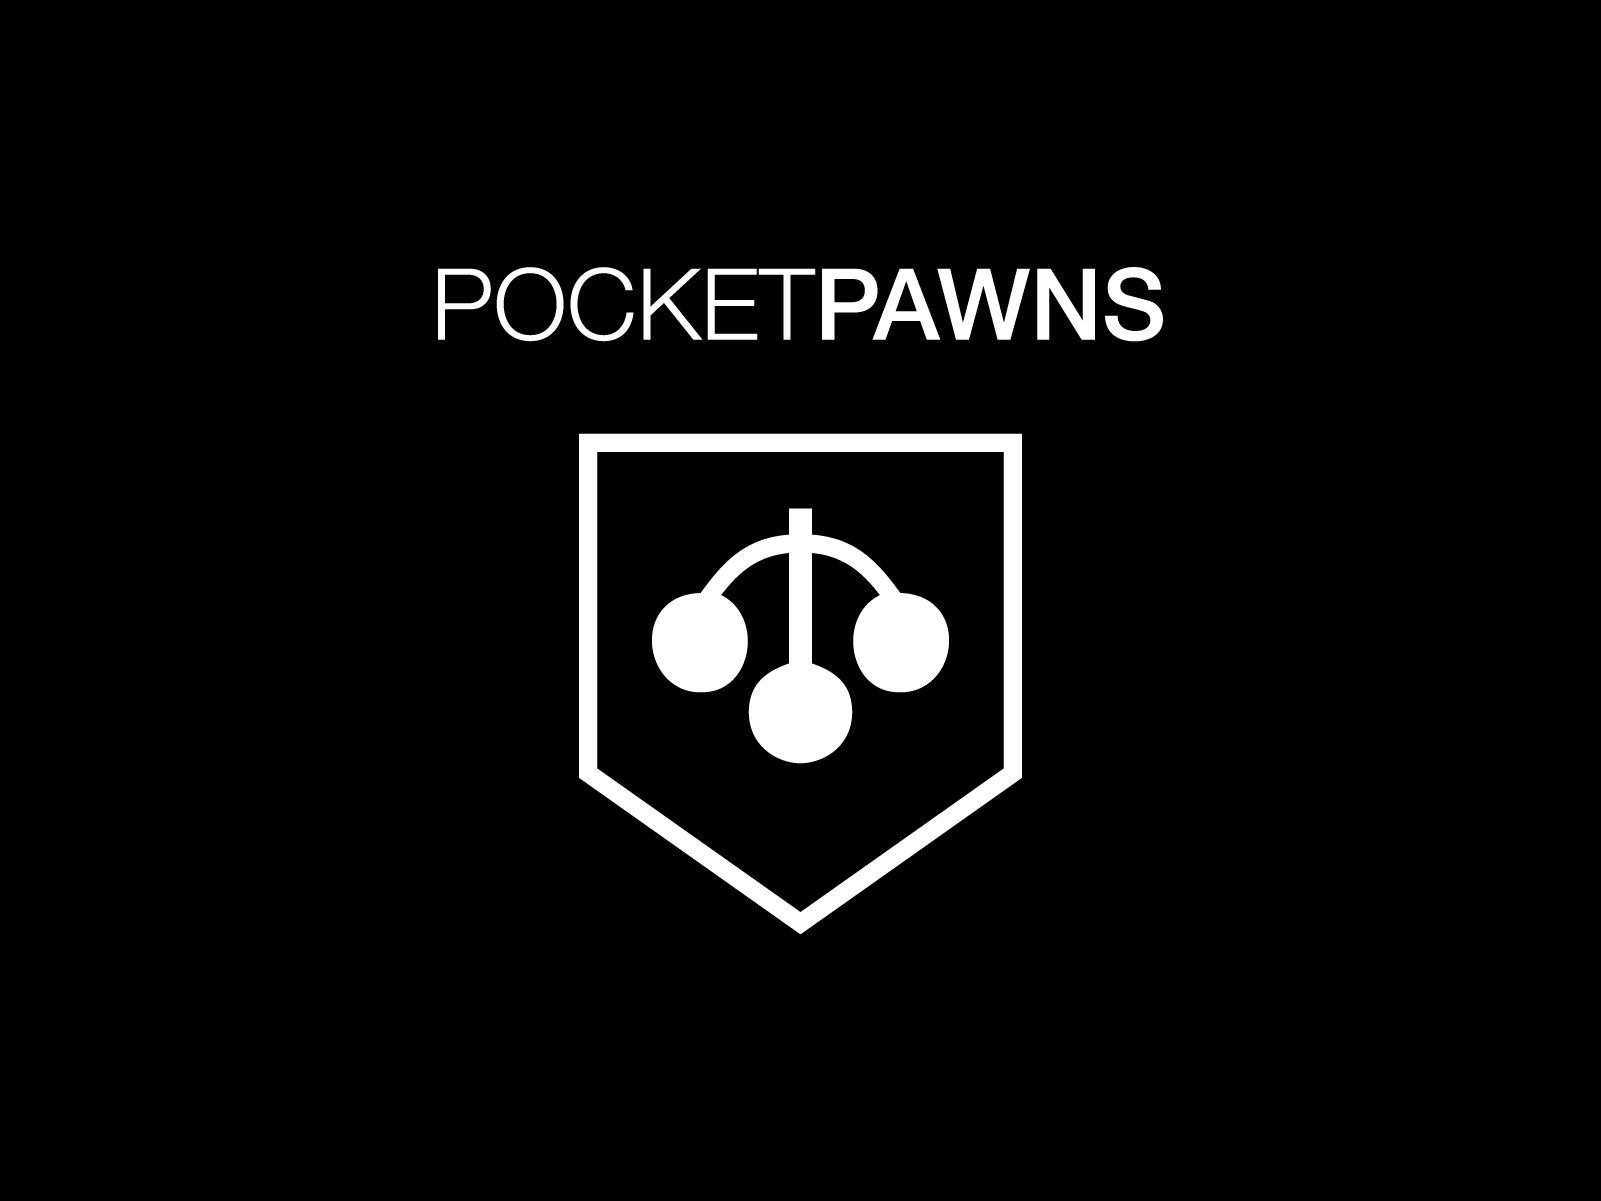 pocketpawns-logo-black-background